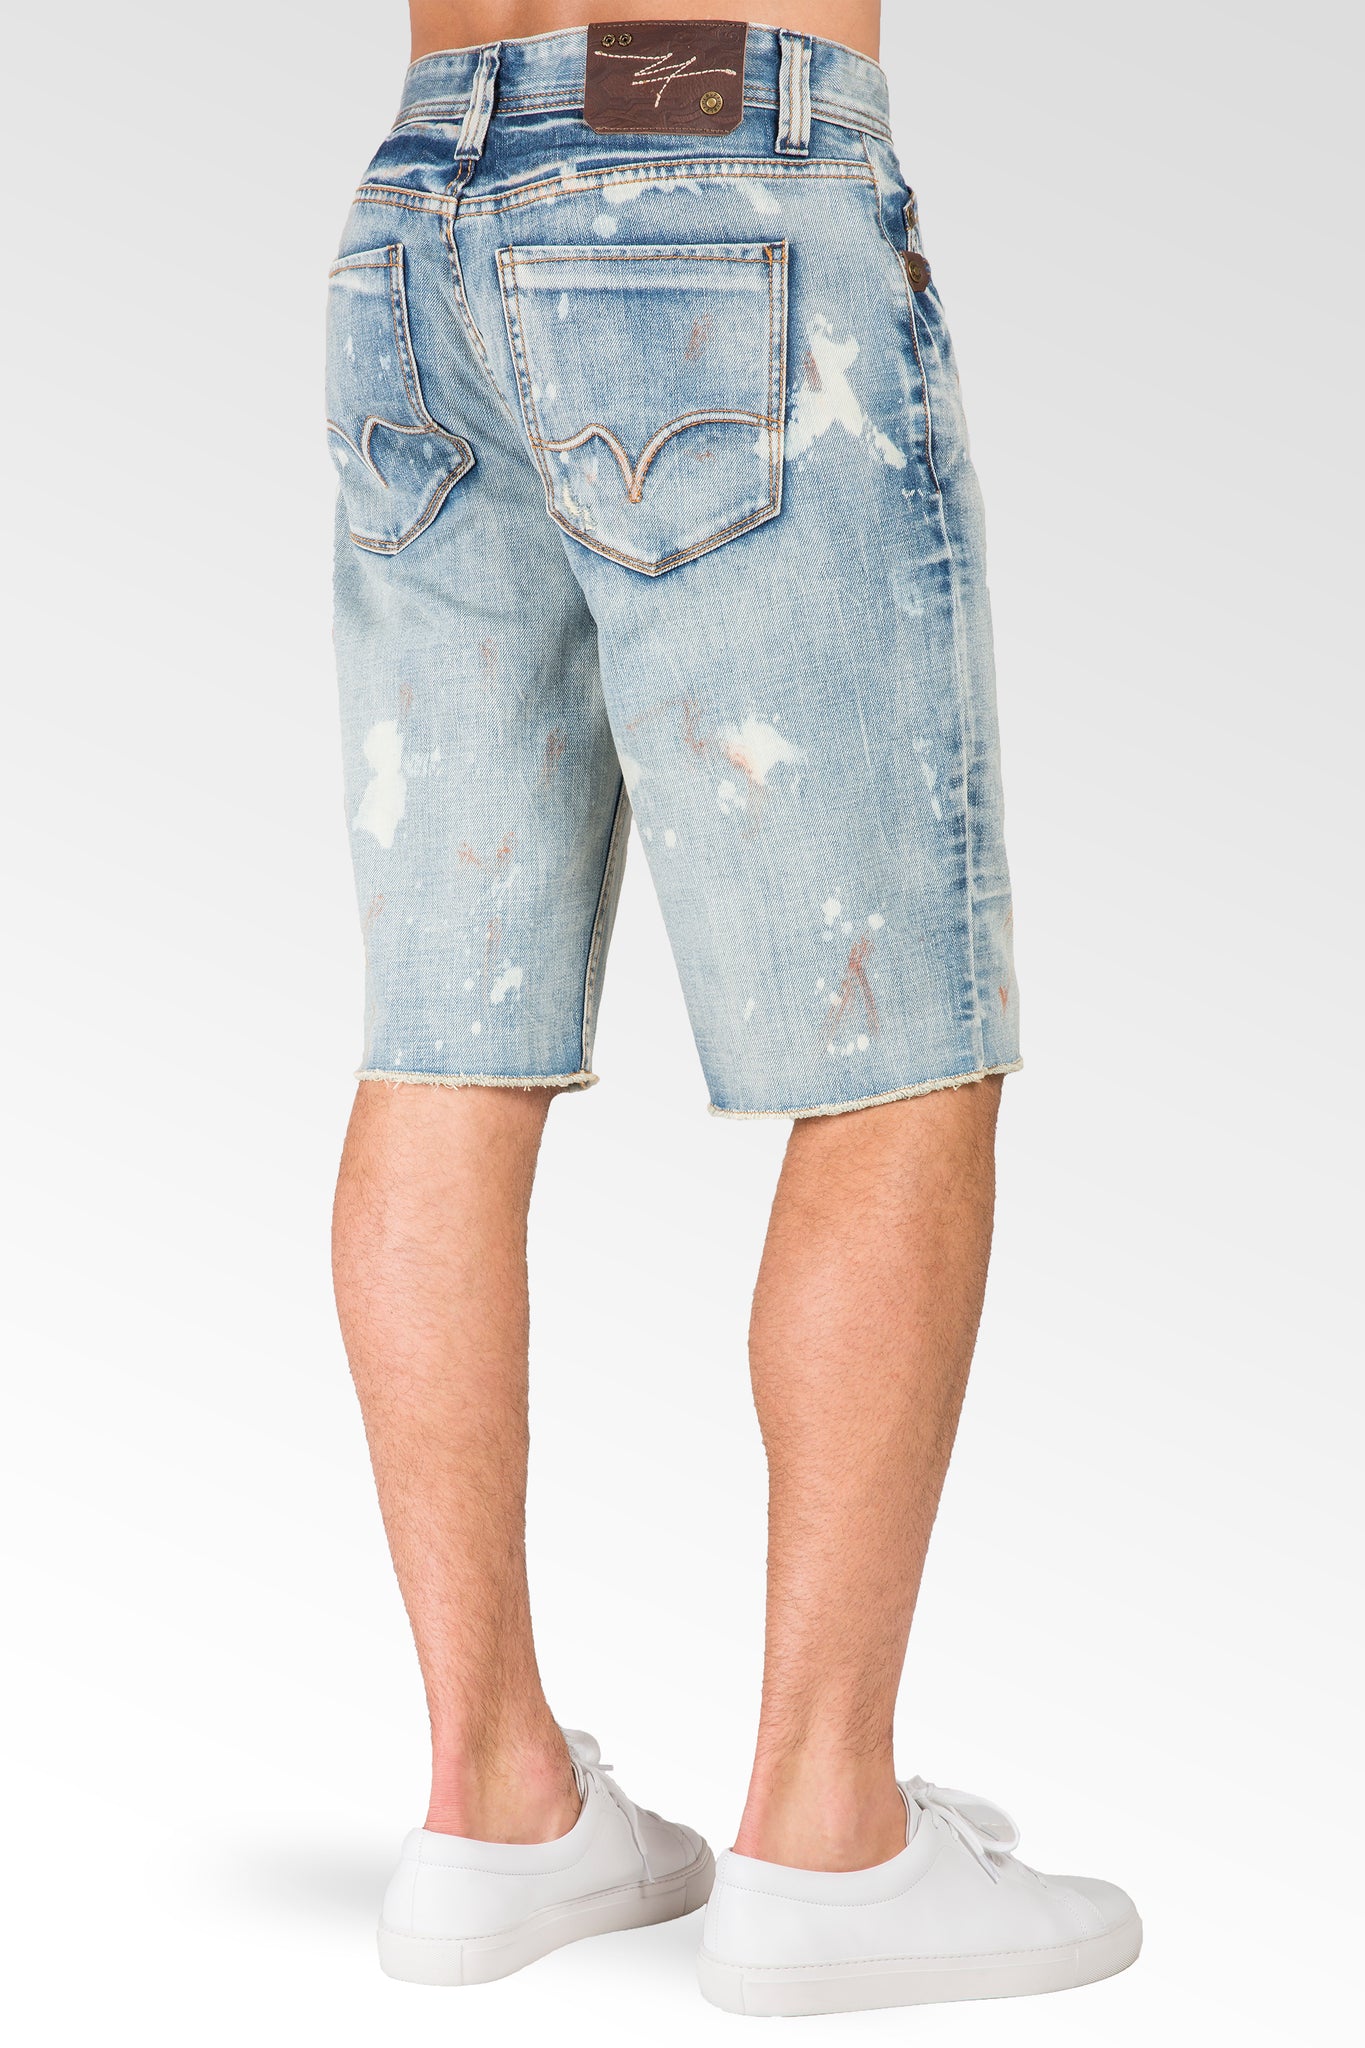 Relaxed Midrise Bleach Blue Cut Off Premium Denim Shorts 13" Inseam paint splatter